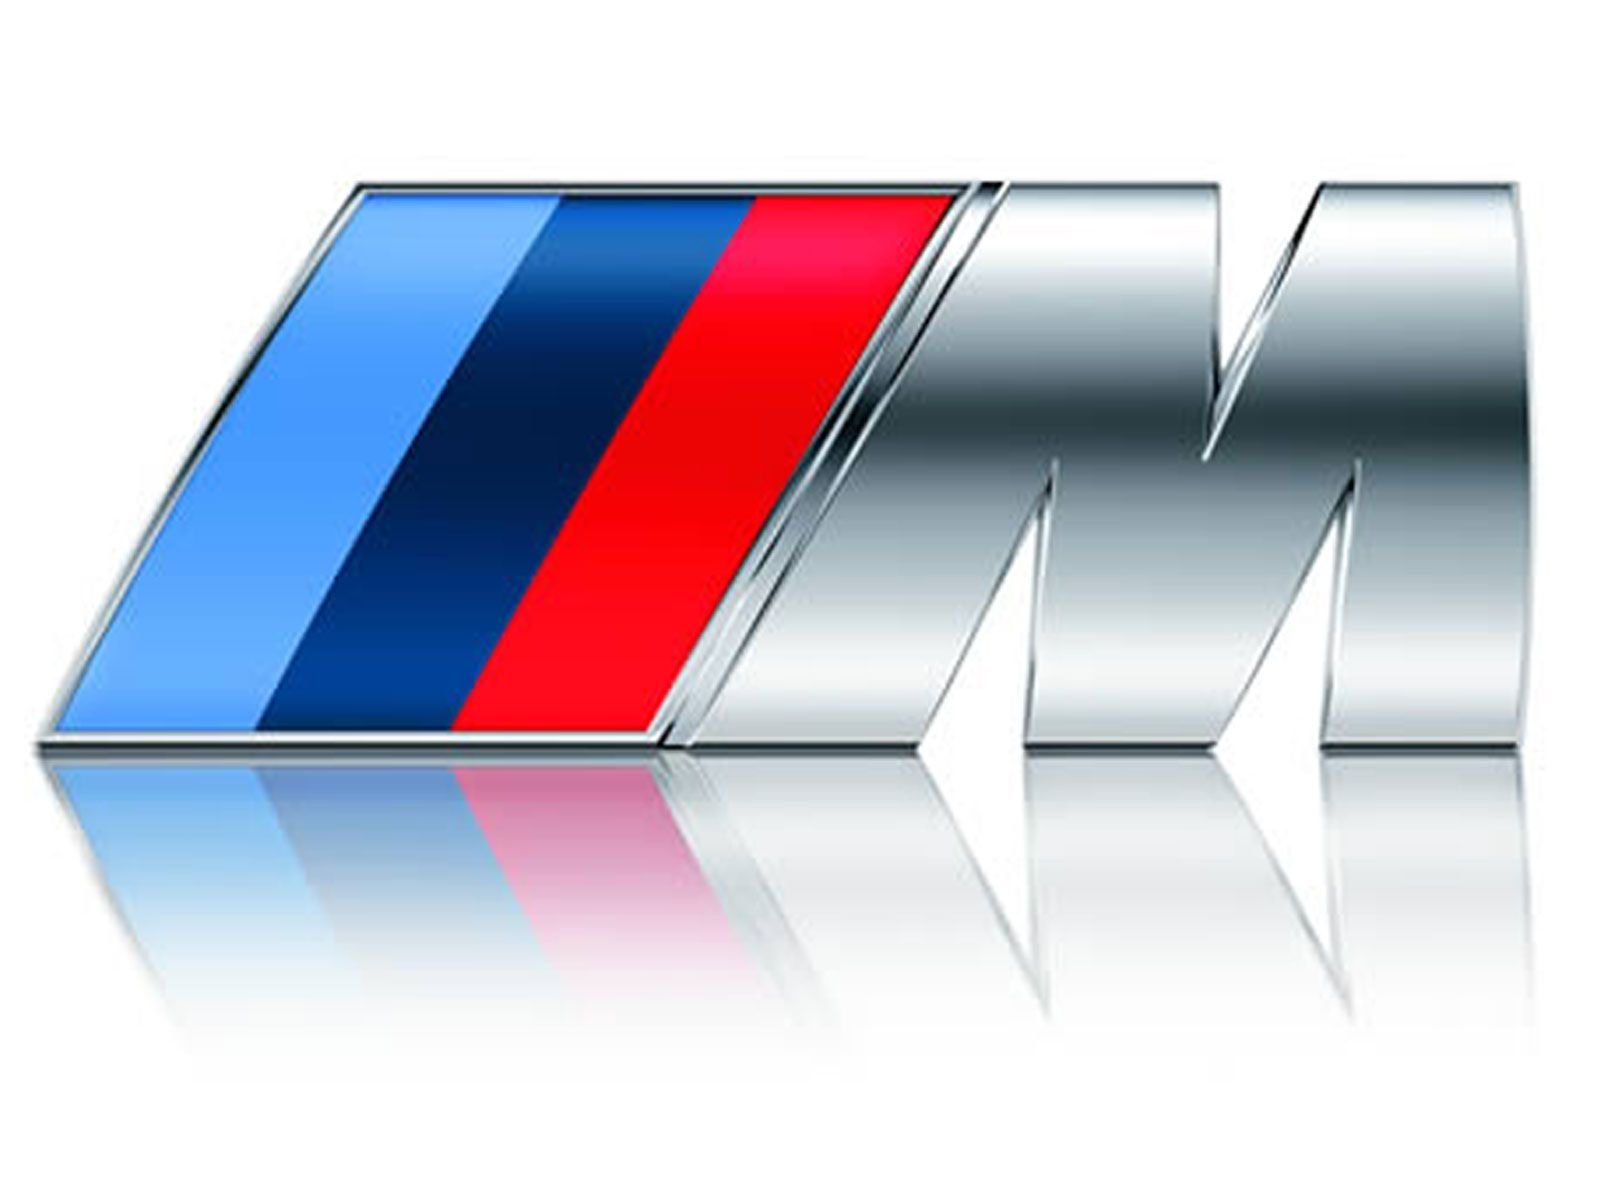 Bmw m power. БМВ MPOWER. BMW Motorsport logo. BMW m3 logo. BMW M logo.